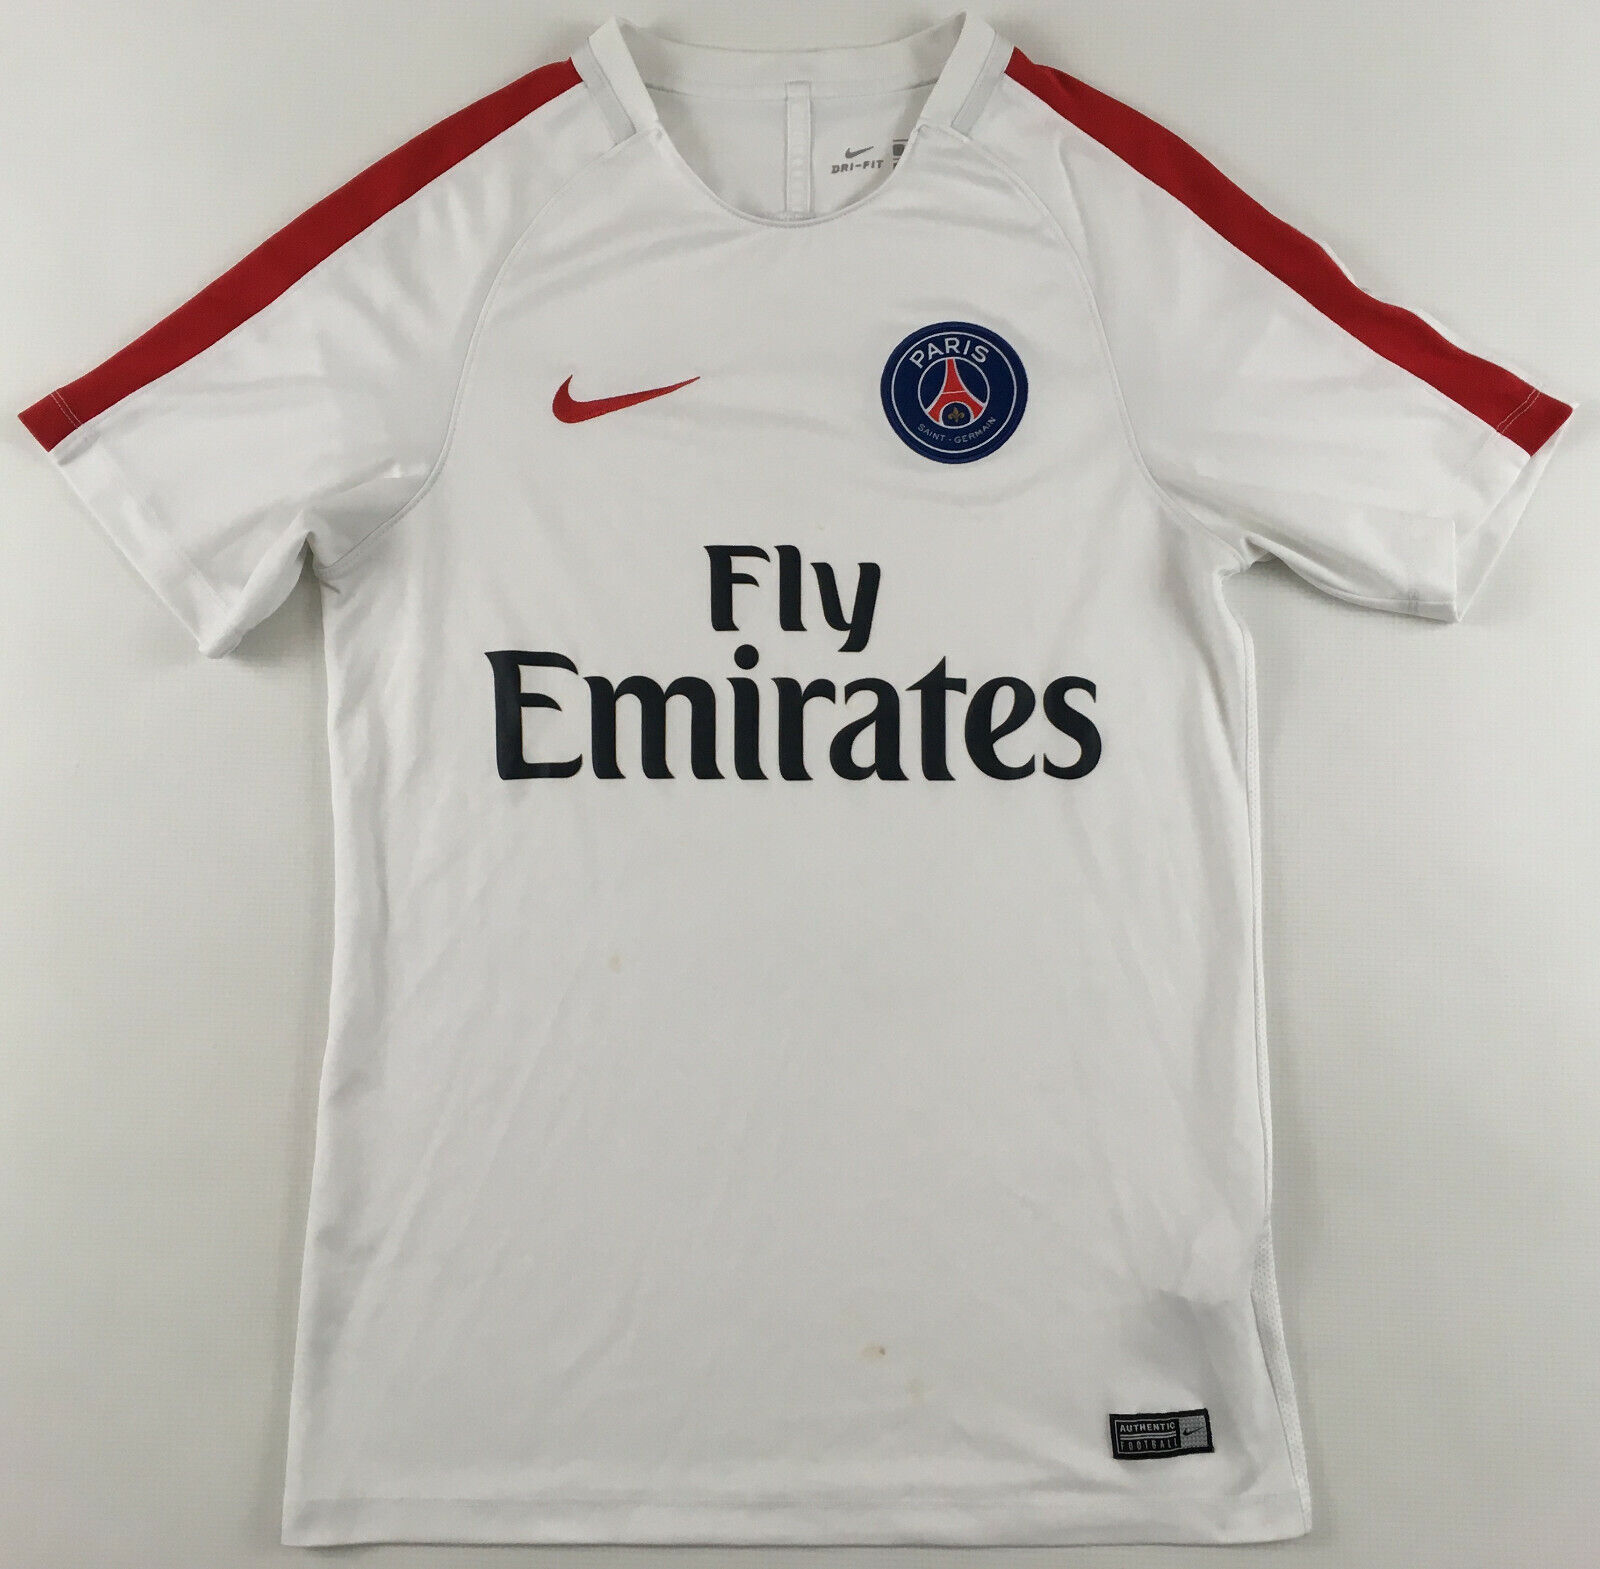 Paris Saint Germain 2016/17 Dry Squad Top white training Nike shirt maillot  S